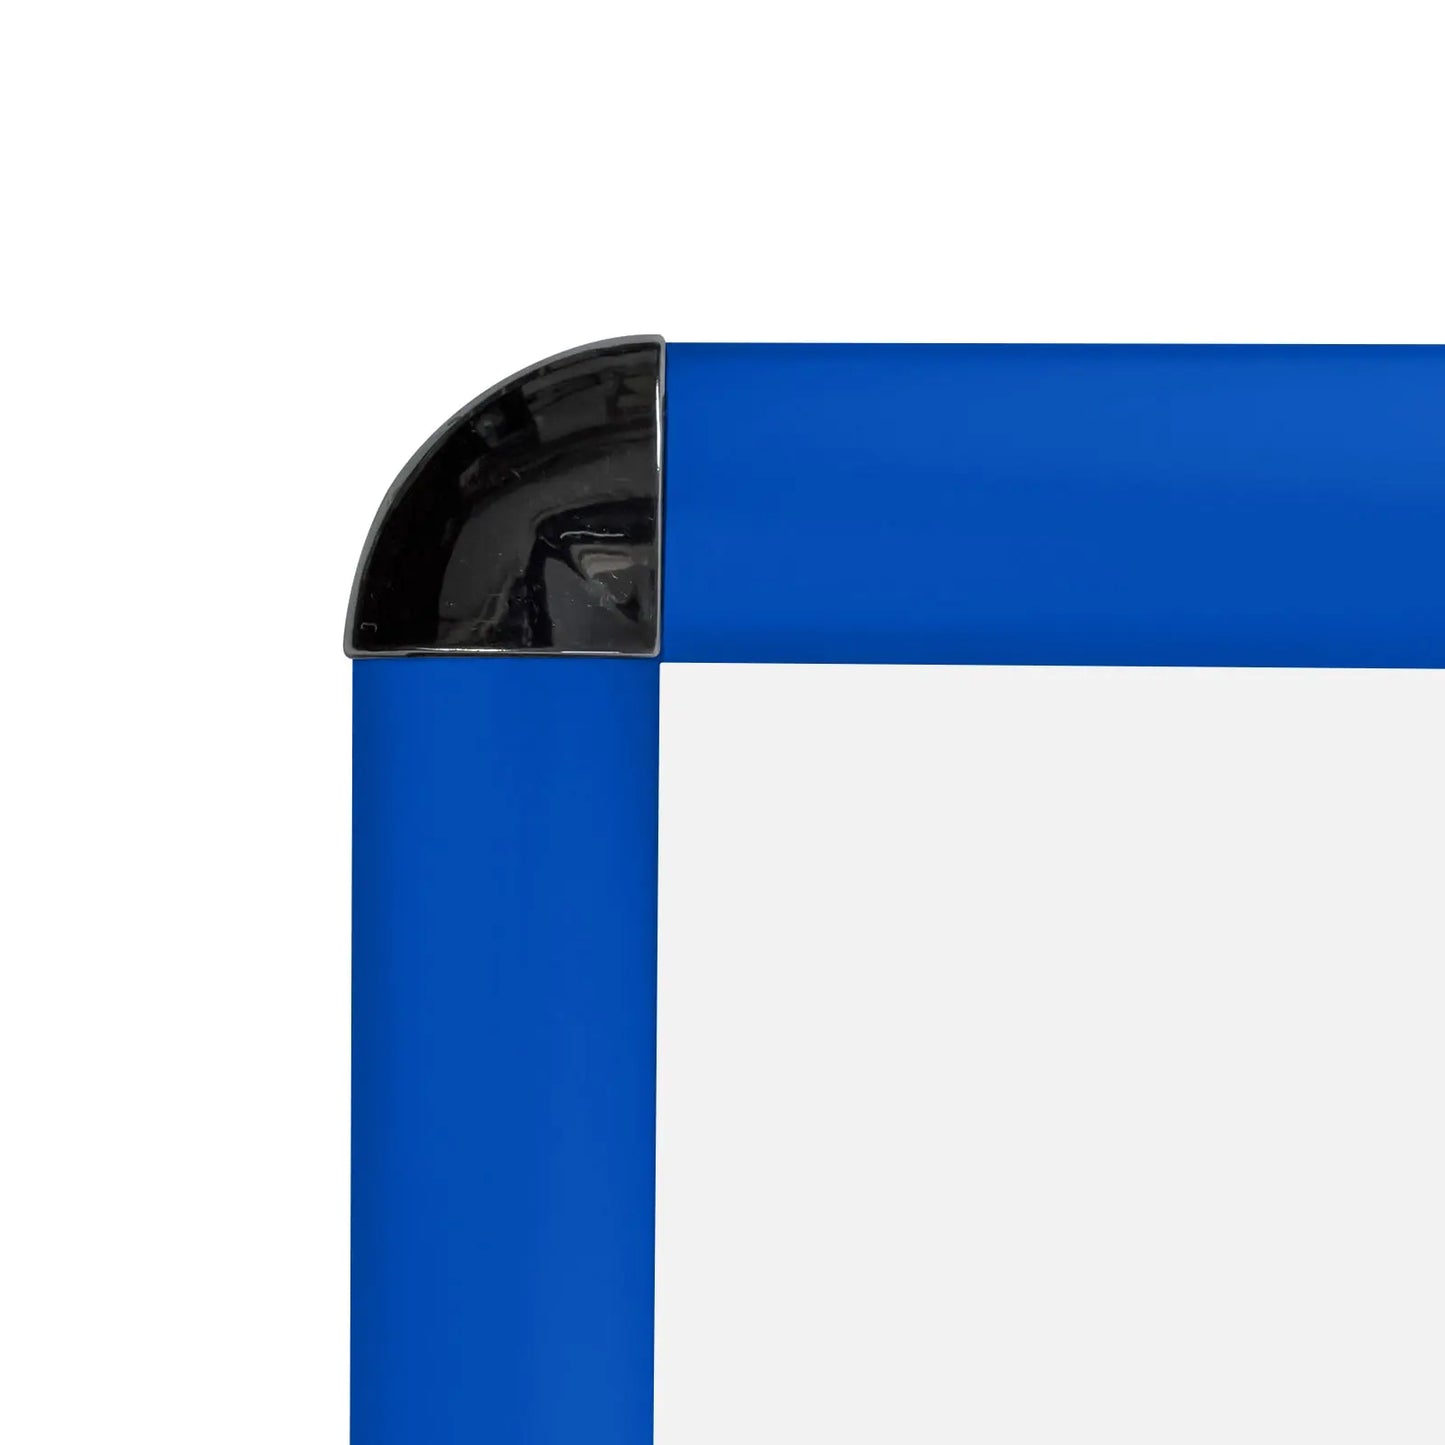 11x17 Blue SnapeZo® Round-Cornered - 1" Profile - Snap Frames Direct